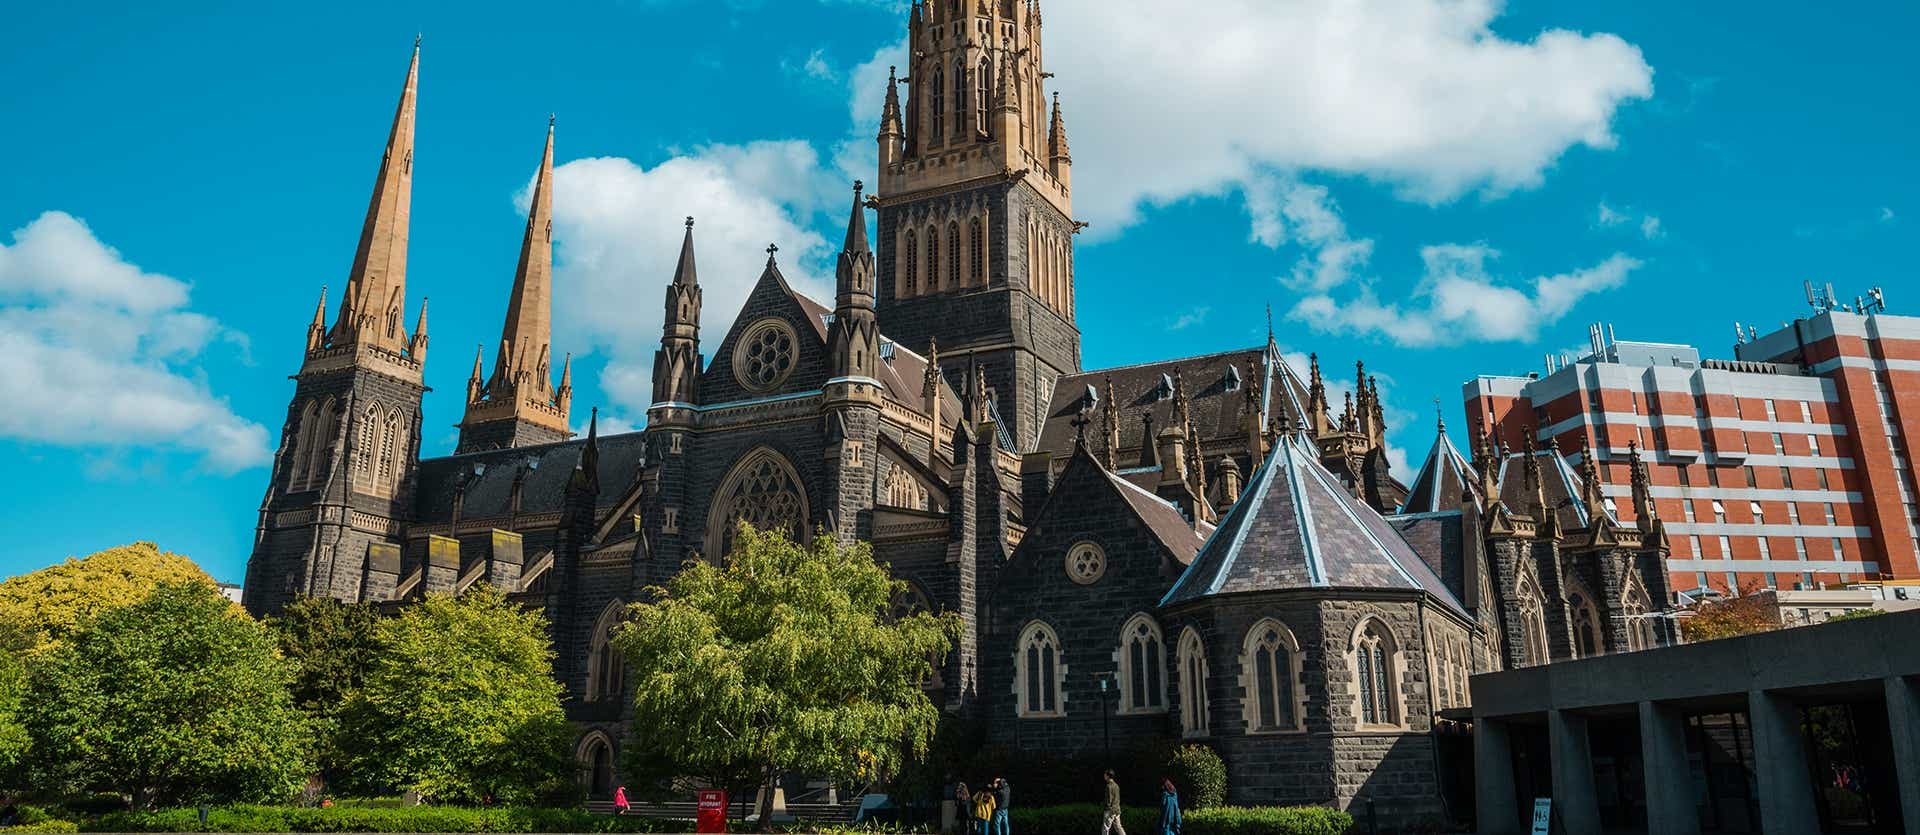 St. Patrick's Cathedral <span class="iconos separador"></span> Melbourne <span class="iconos separador"></span> Australia